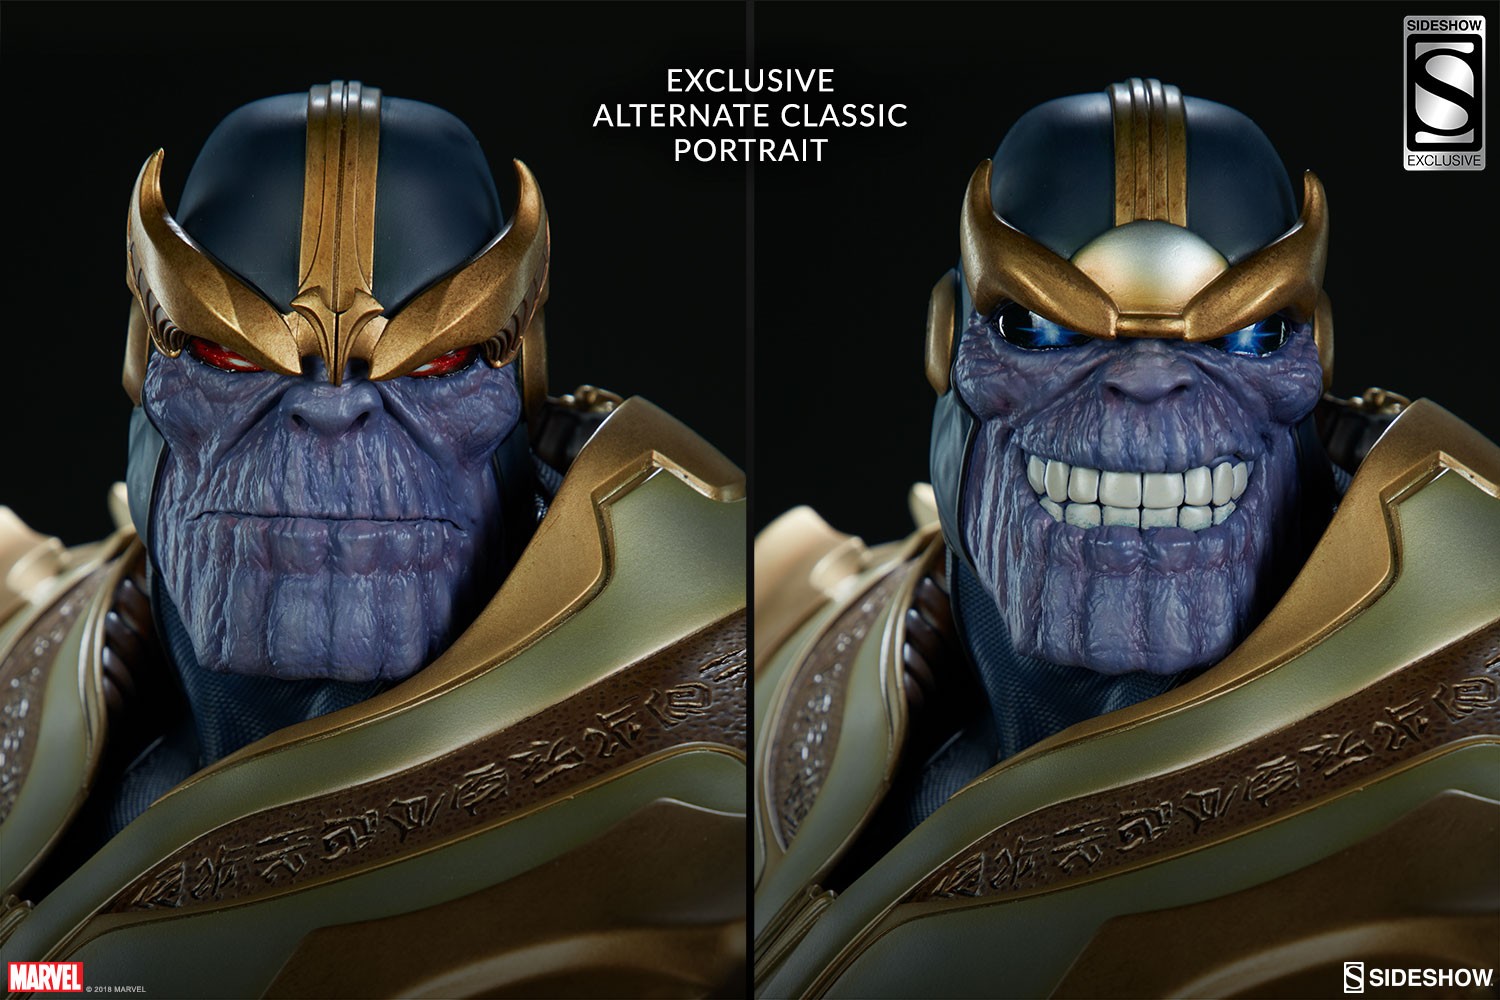 Thanos on Throne Exclusive Edition (Prototype Shown) View 1